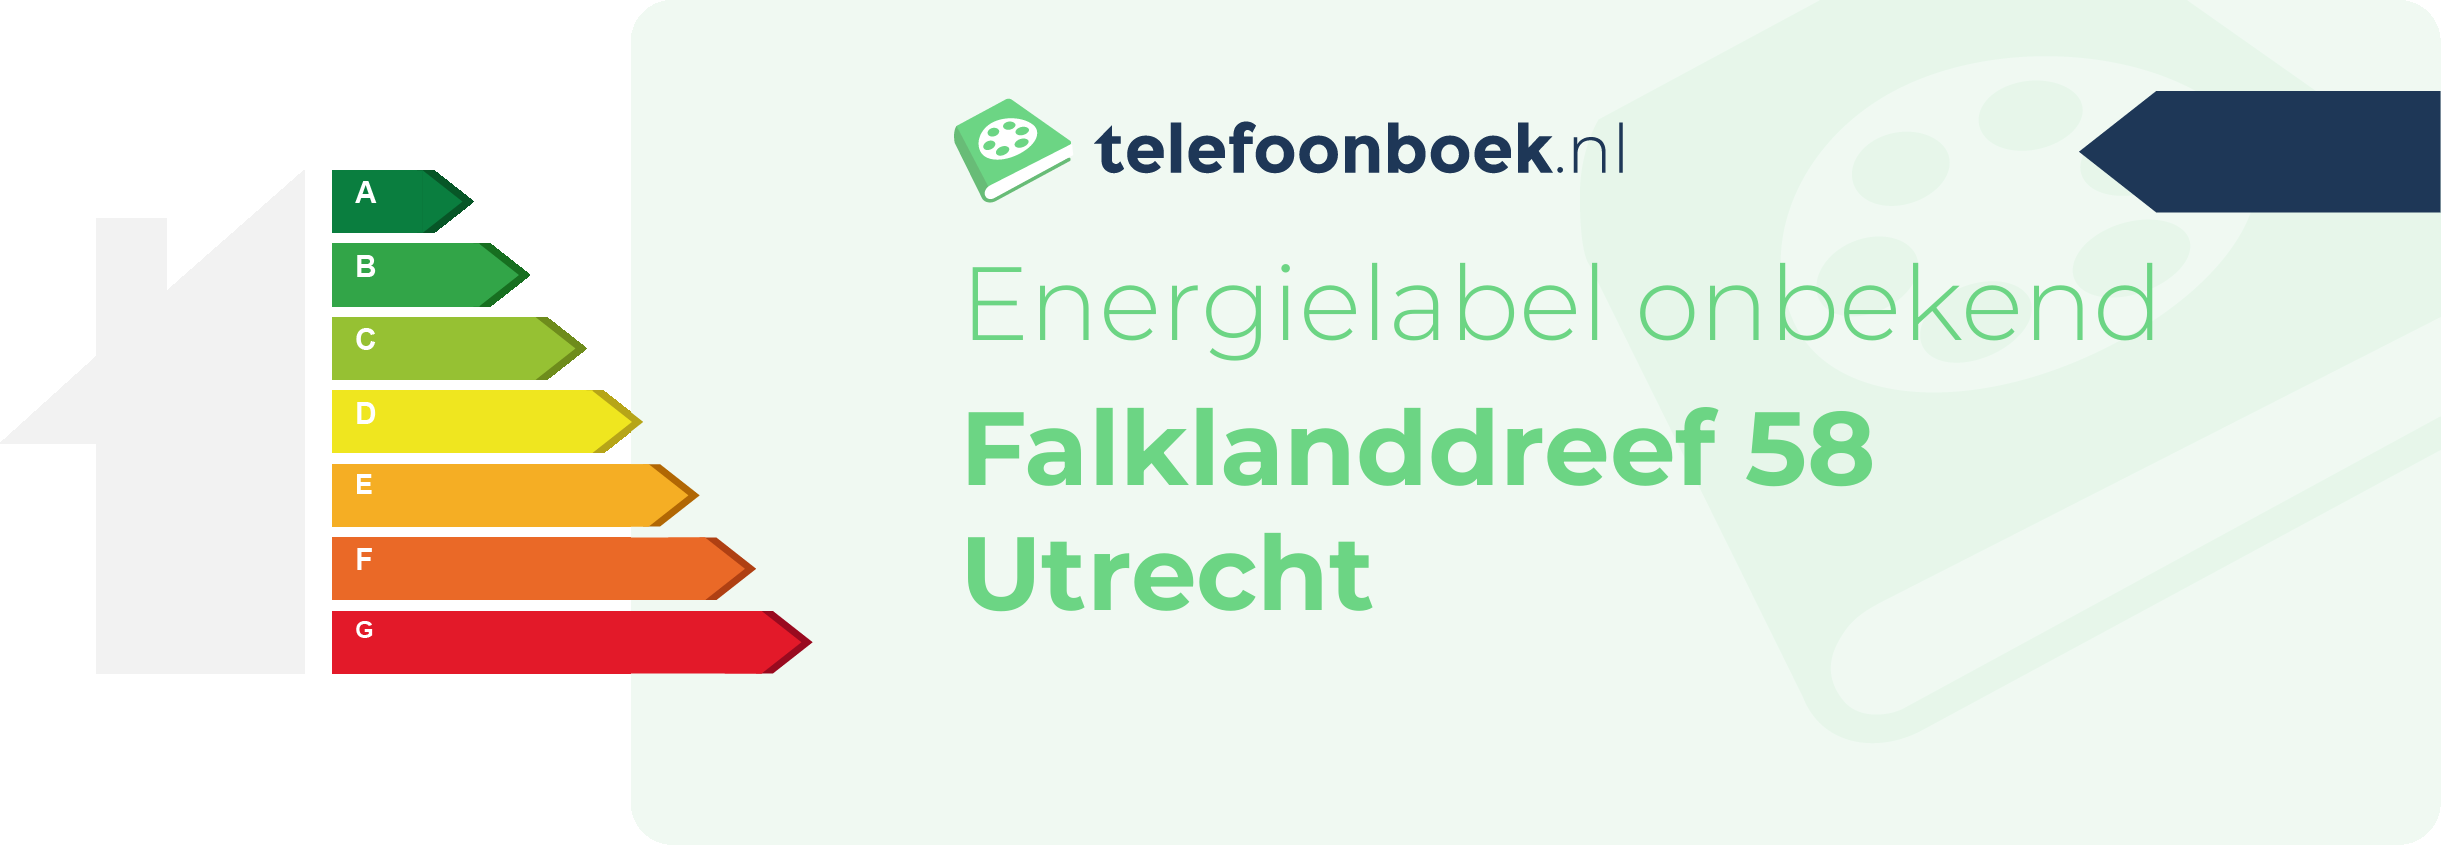 Energielabel Falklanddreef 58 Utrecht